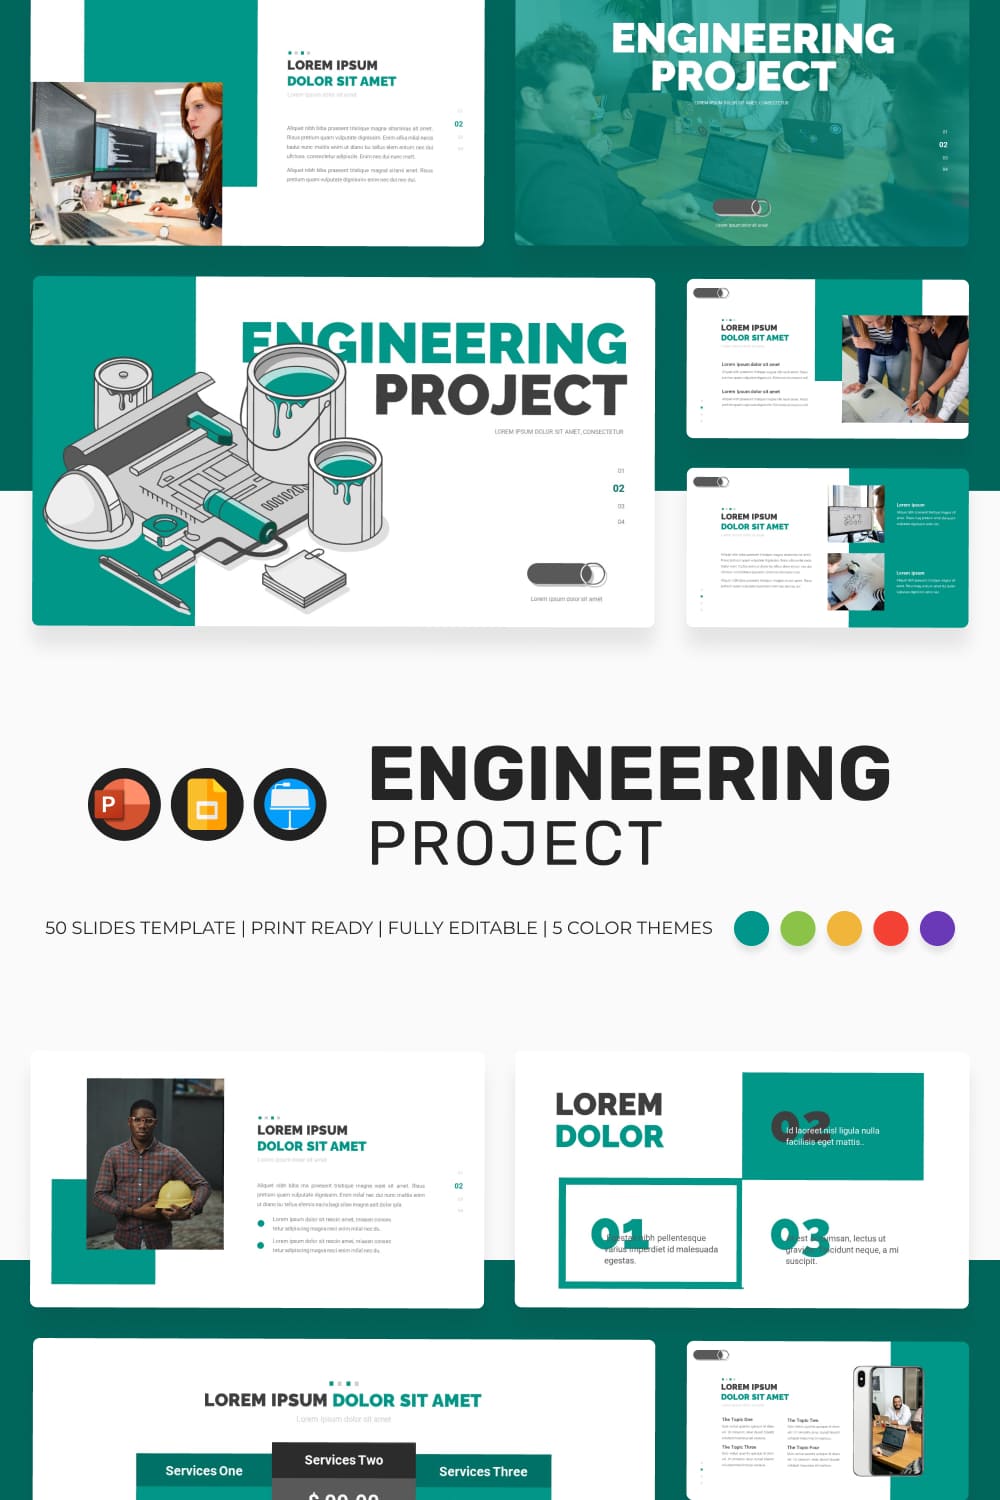 Engineering project presentation template pinterest image.